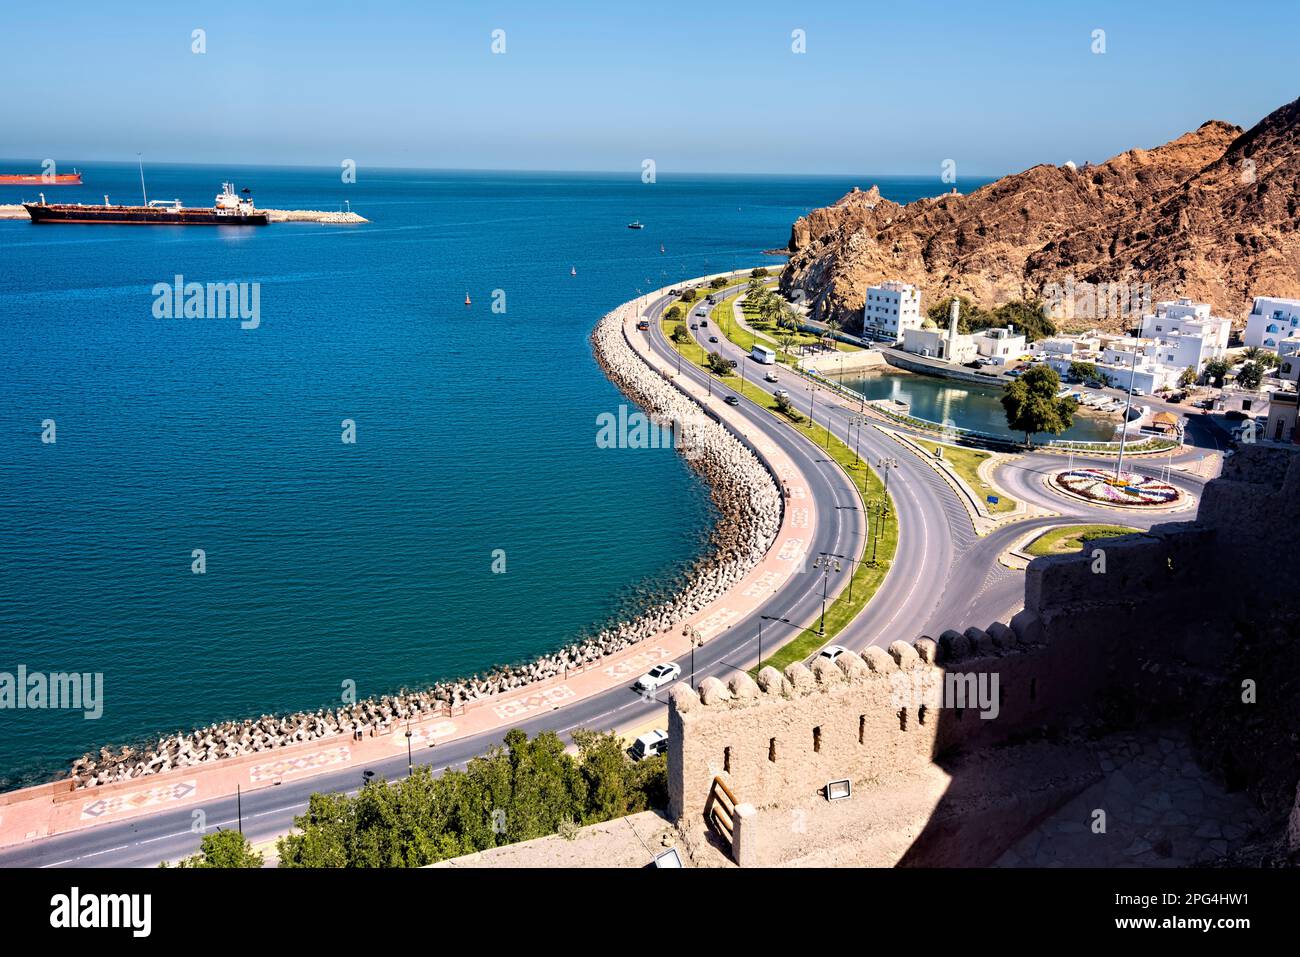 The Mutrah Corniche and Gulf of Oman, Muscat, Oman Stock Photo